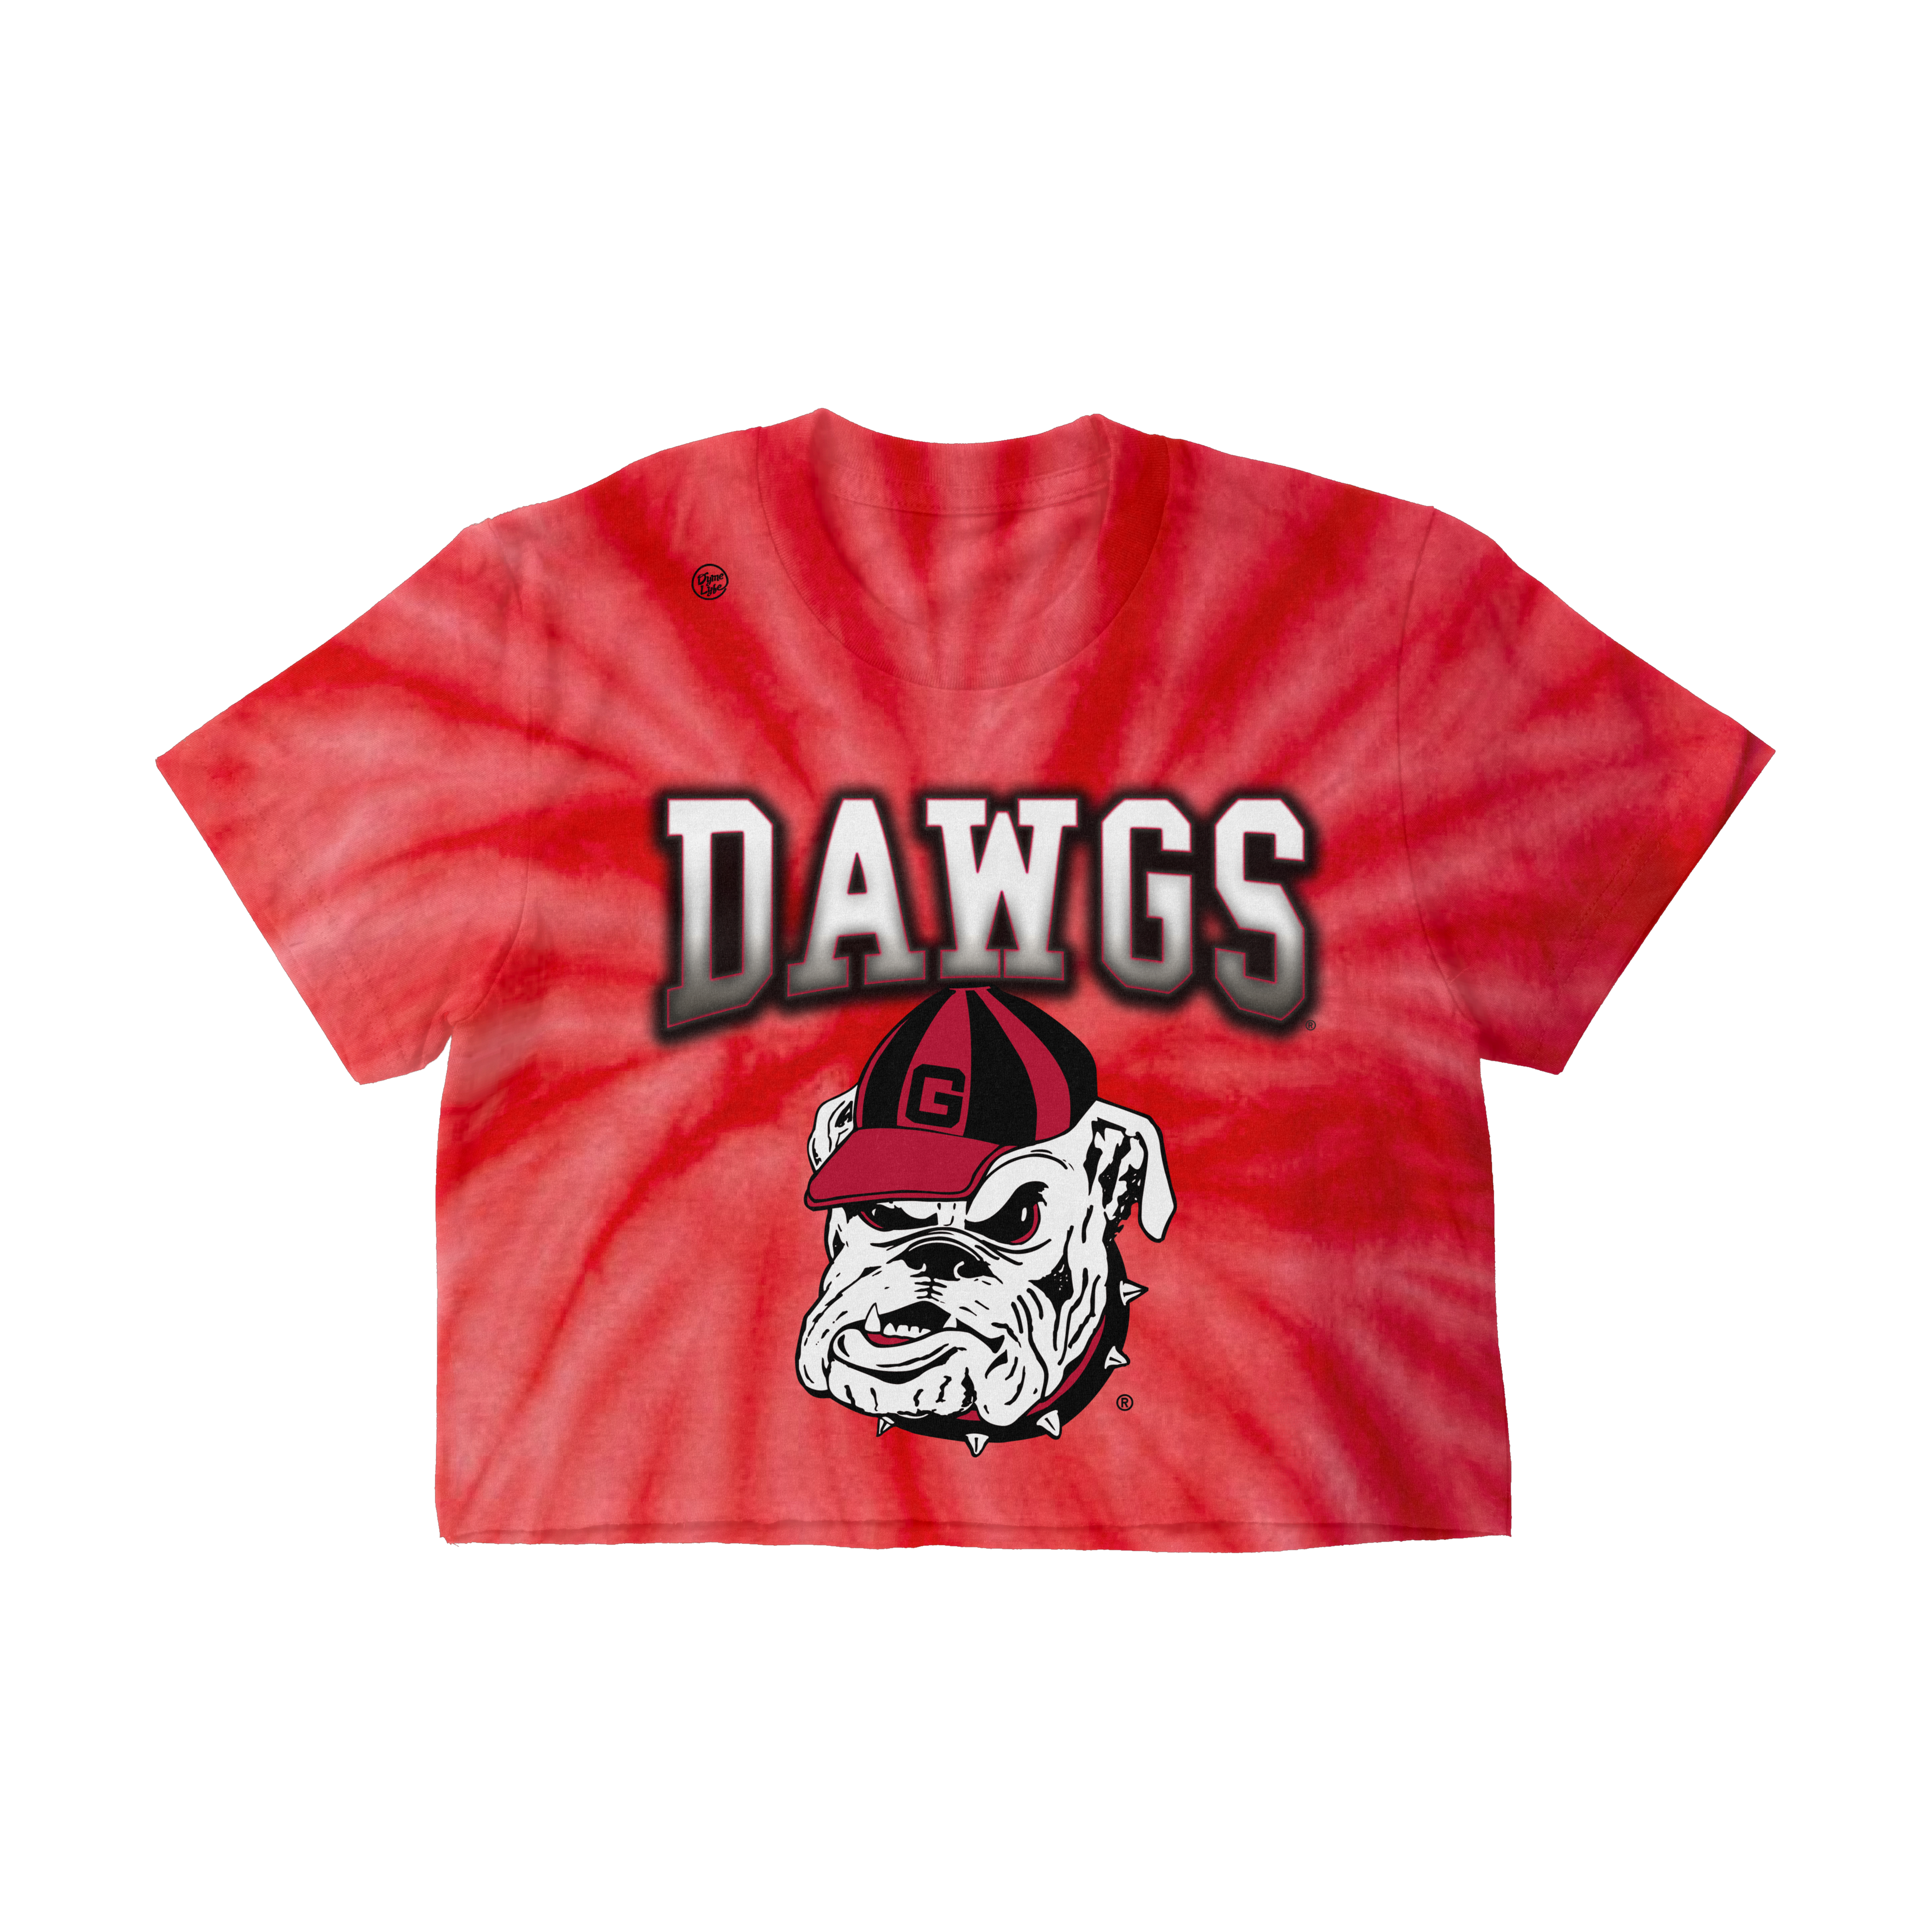 Georgia Bulldogs Women’s Tie Dye Team Crop Top